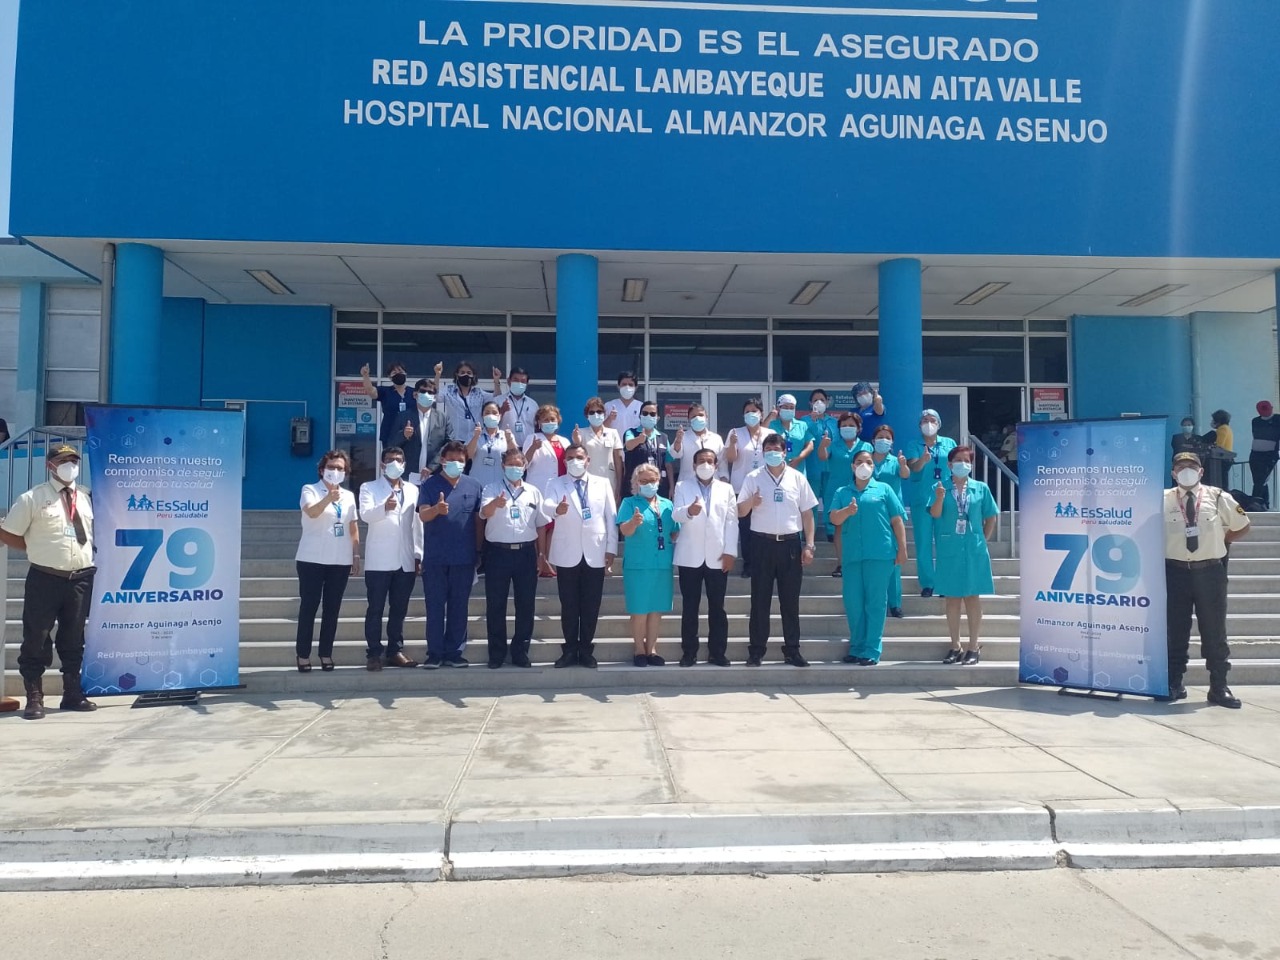 Essalud - EsSalud Lambayeque: Hospital Nacional Almanzor Aguinaga Asenjo celebra su 79 aniversario